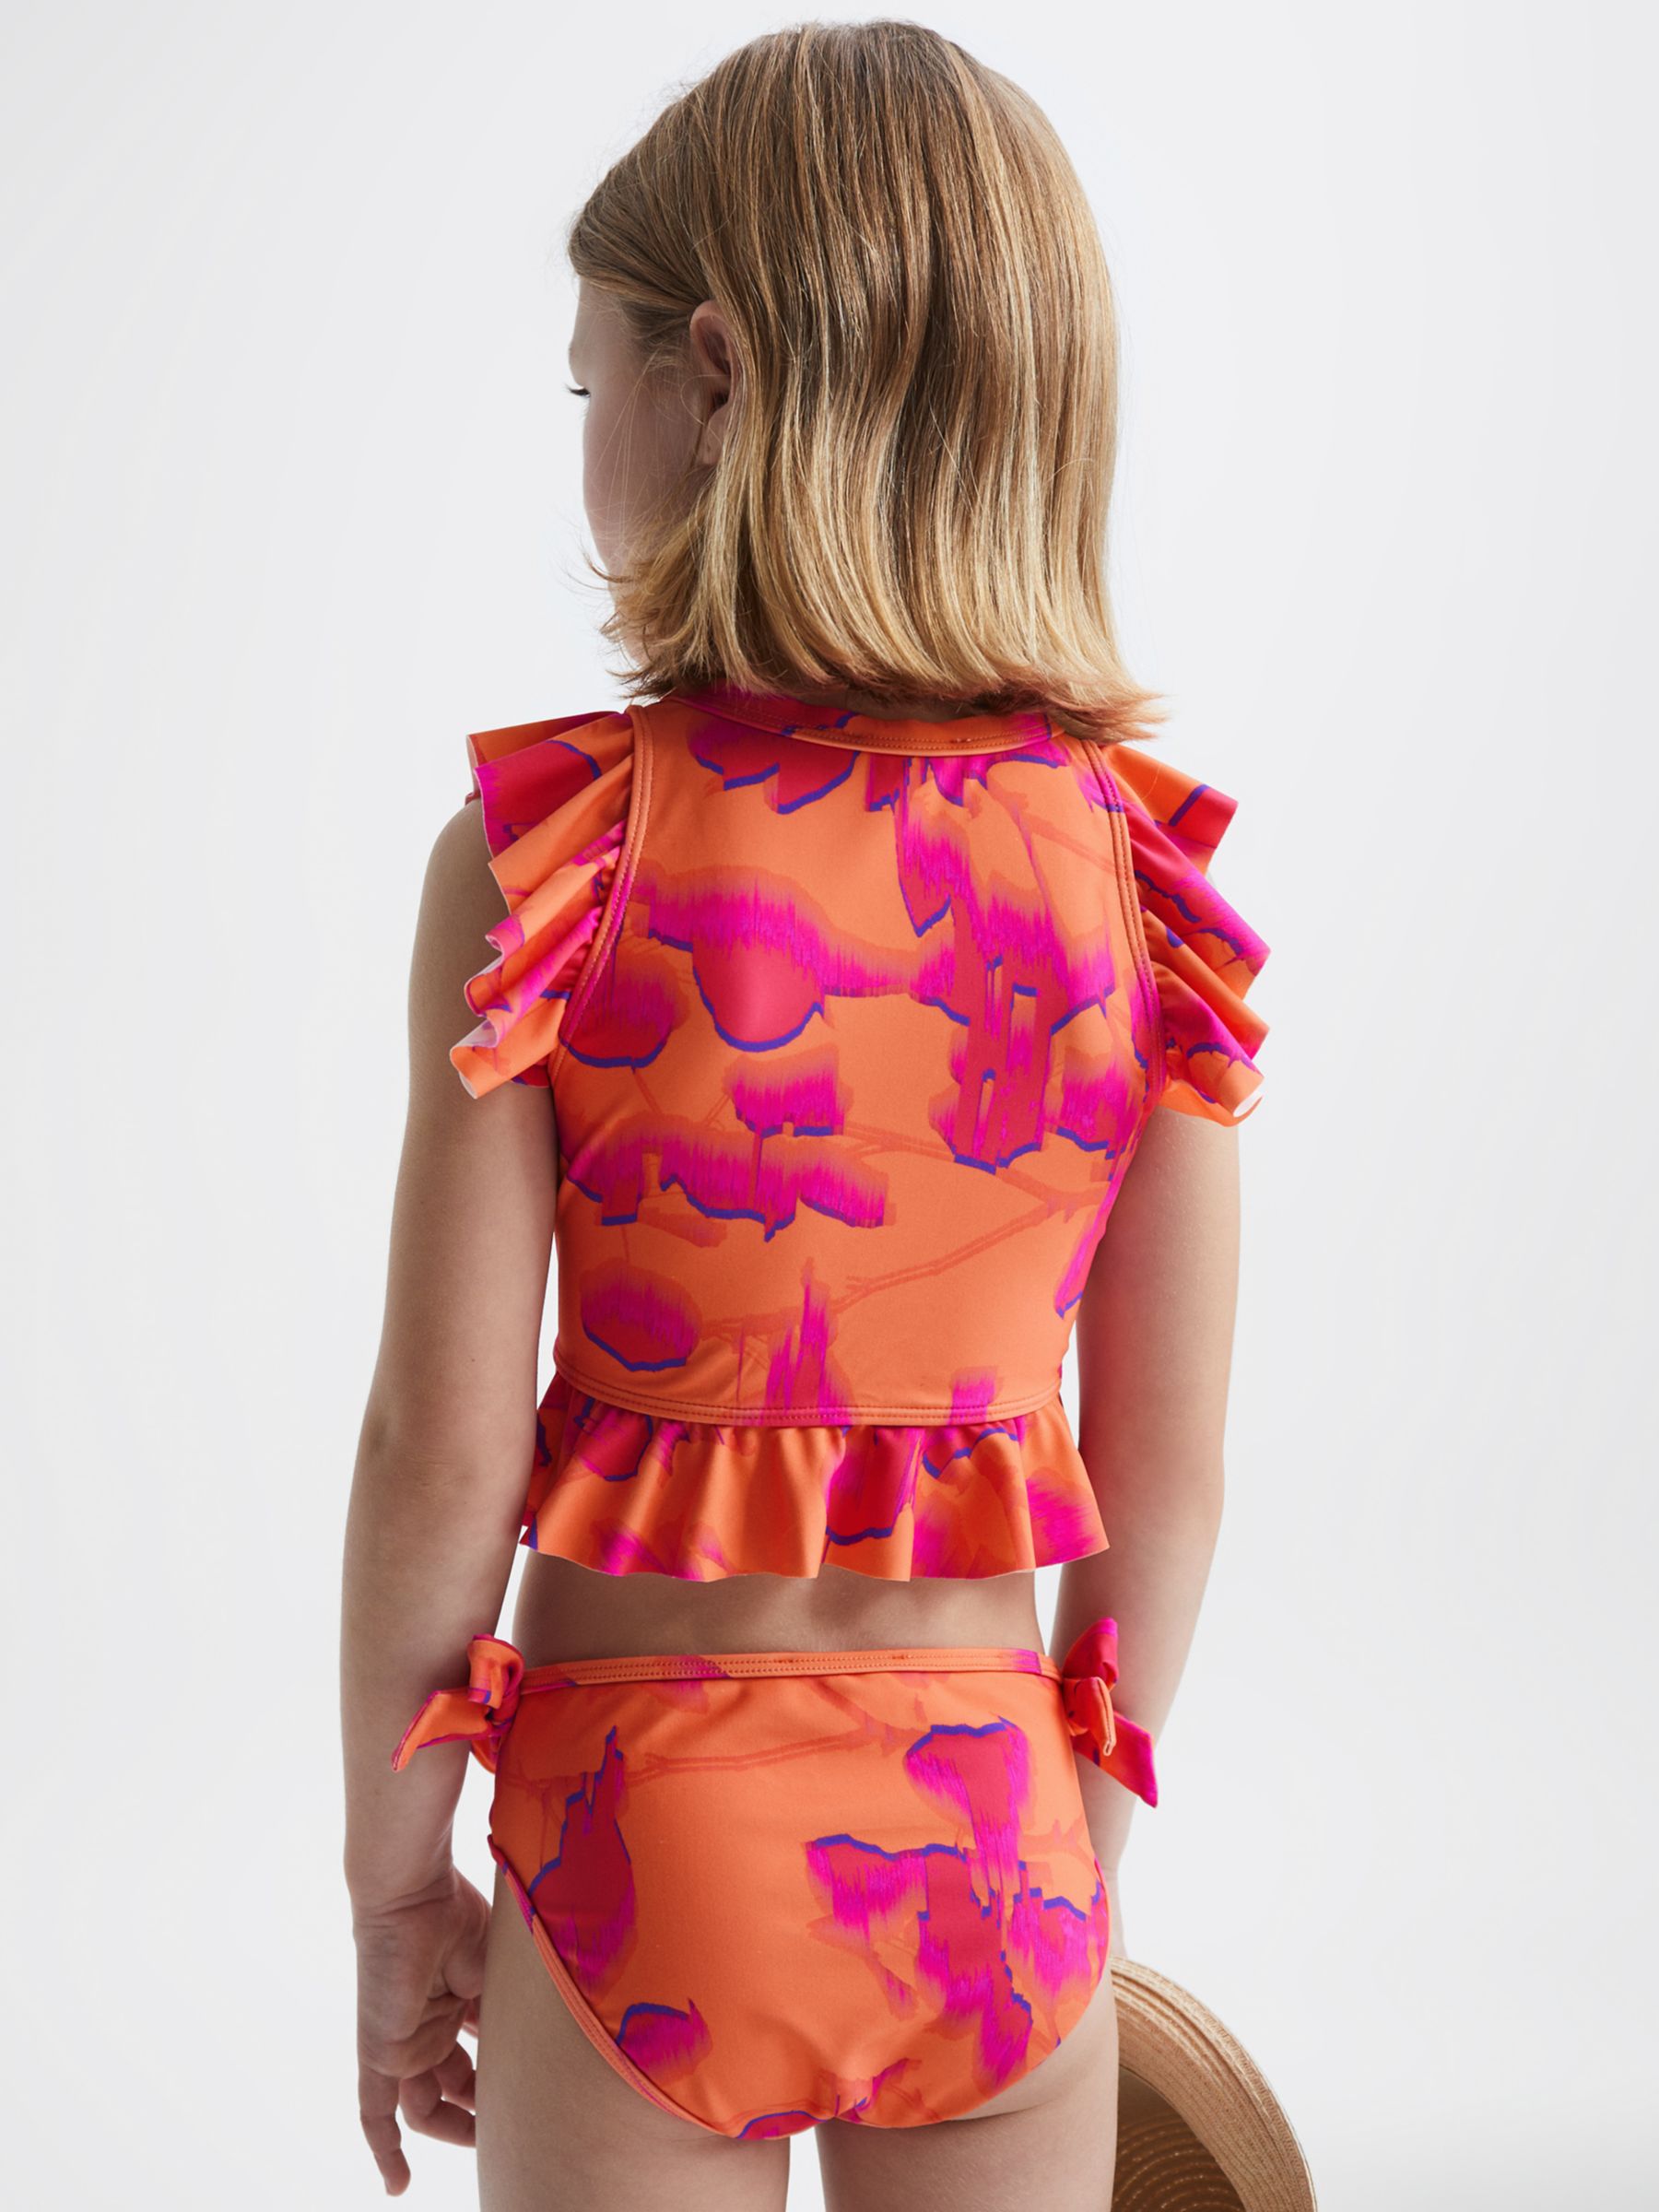 Reiss Kids' Lilly Print Bikini Set, Orange/Multi, 4-5 years